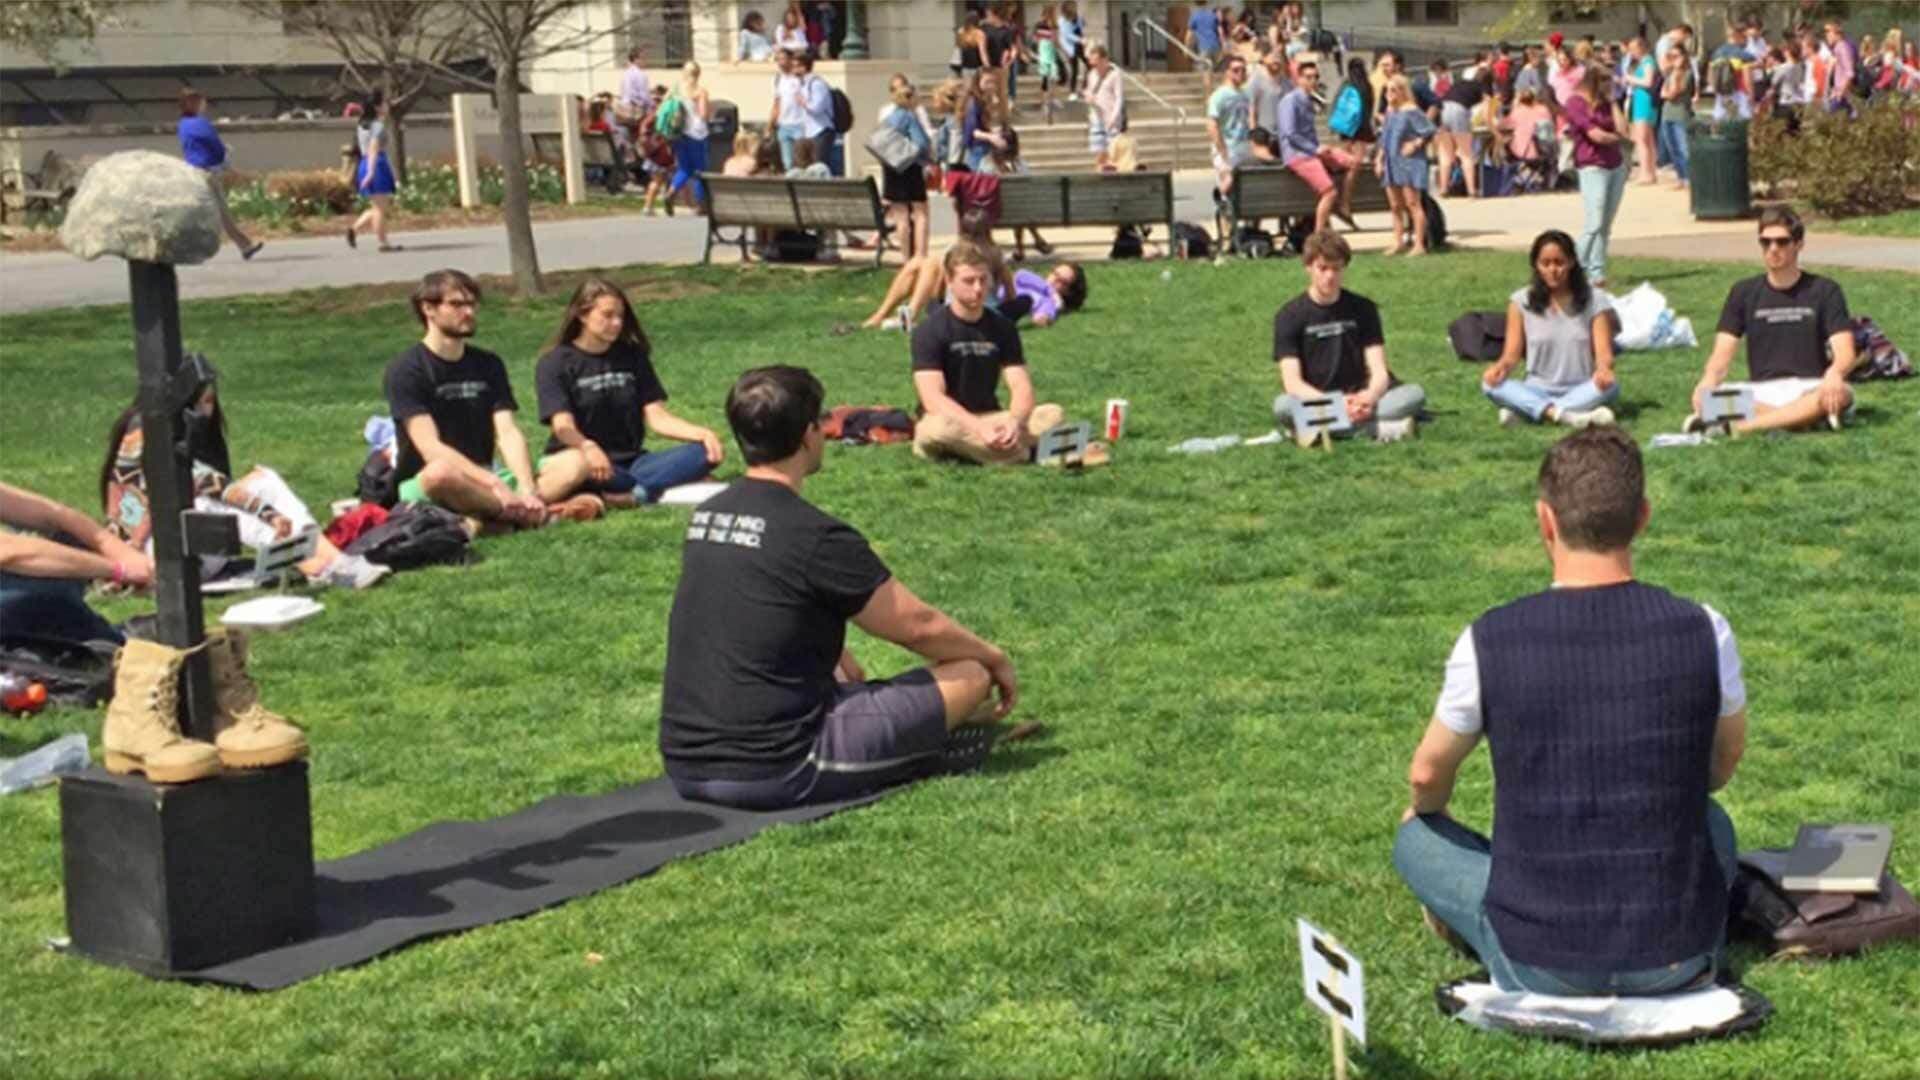 Veterans meditate on lawn